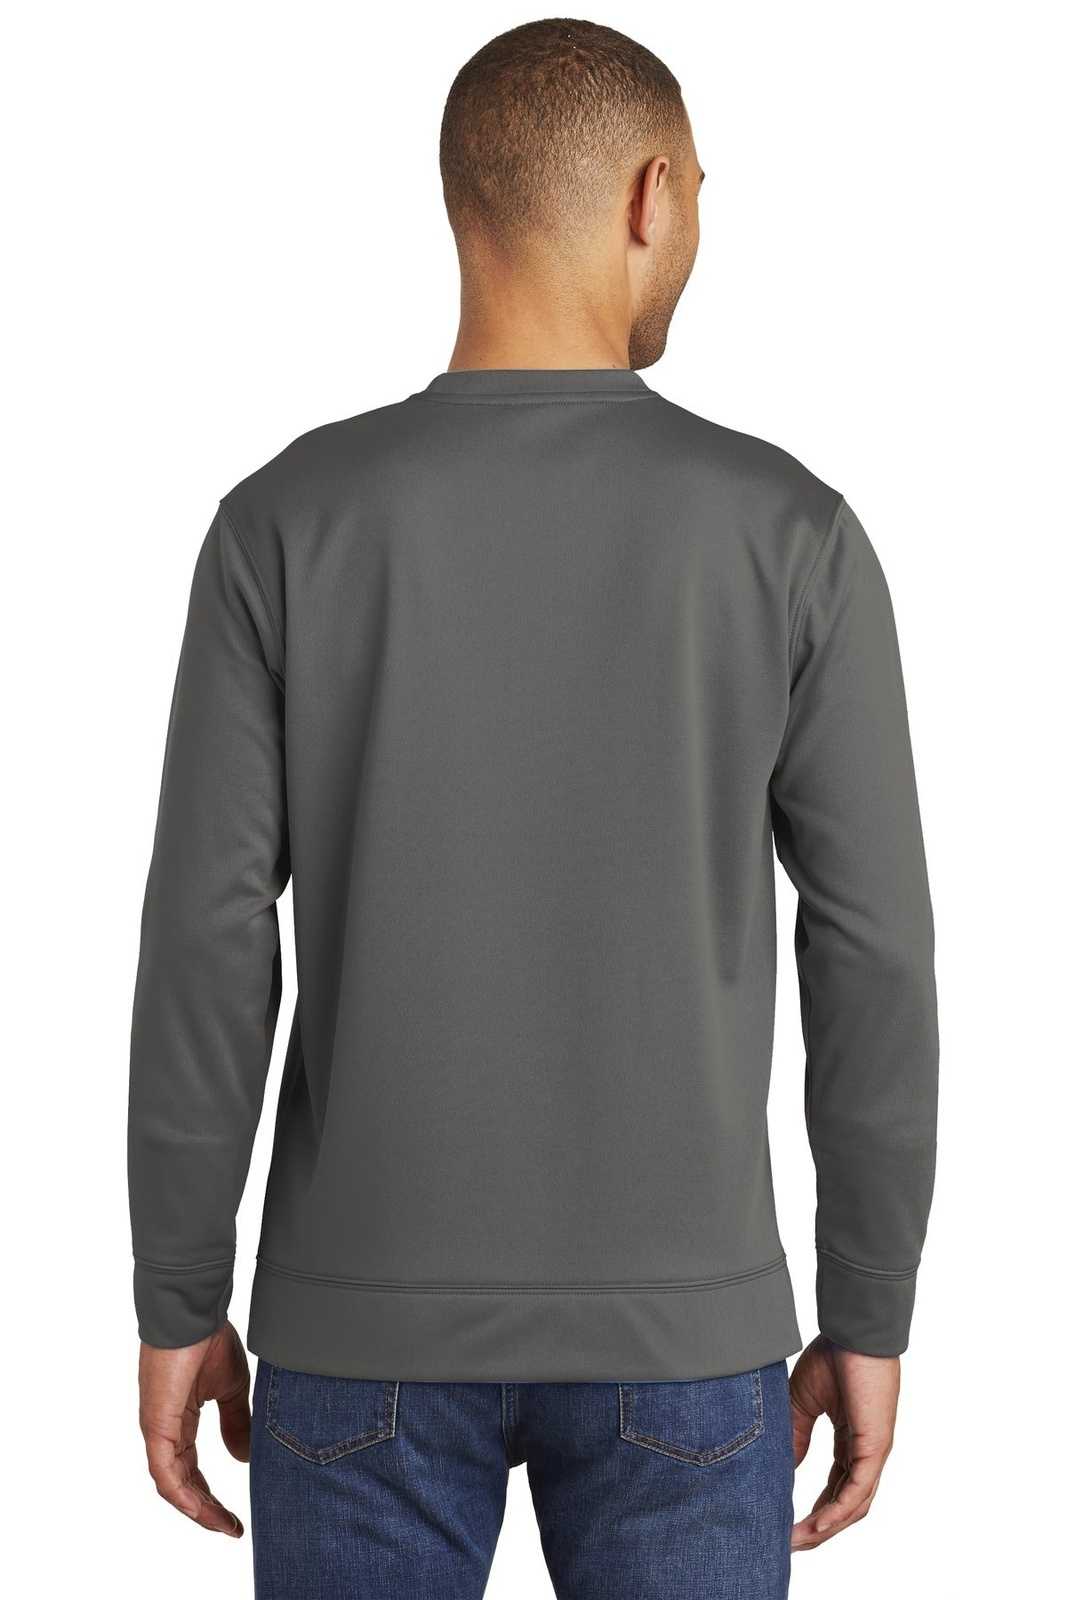 Port & Company PC590 Fleece Crewneck Sweatshirt - Charcoal - HIT a Double - 1